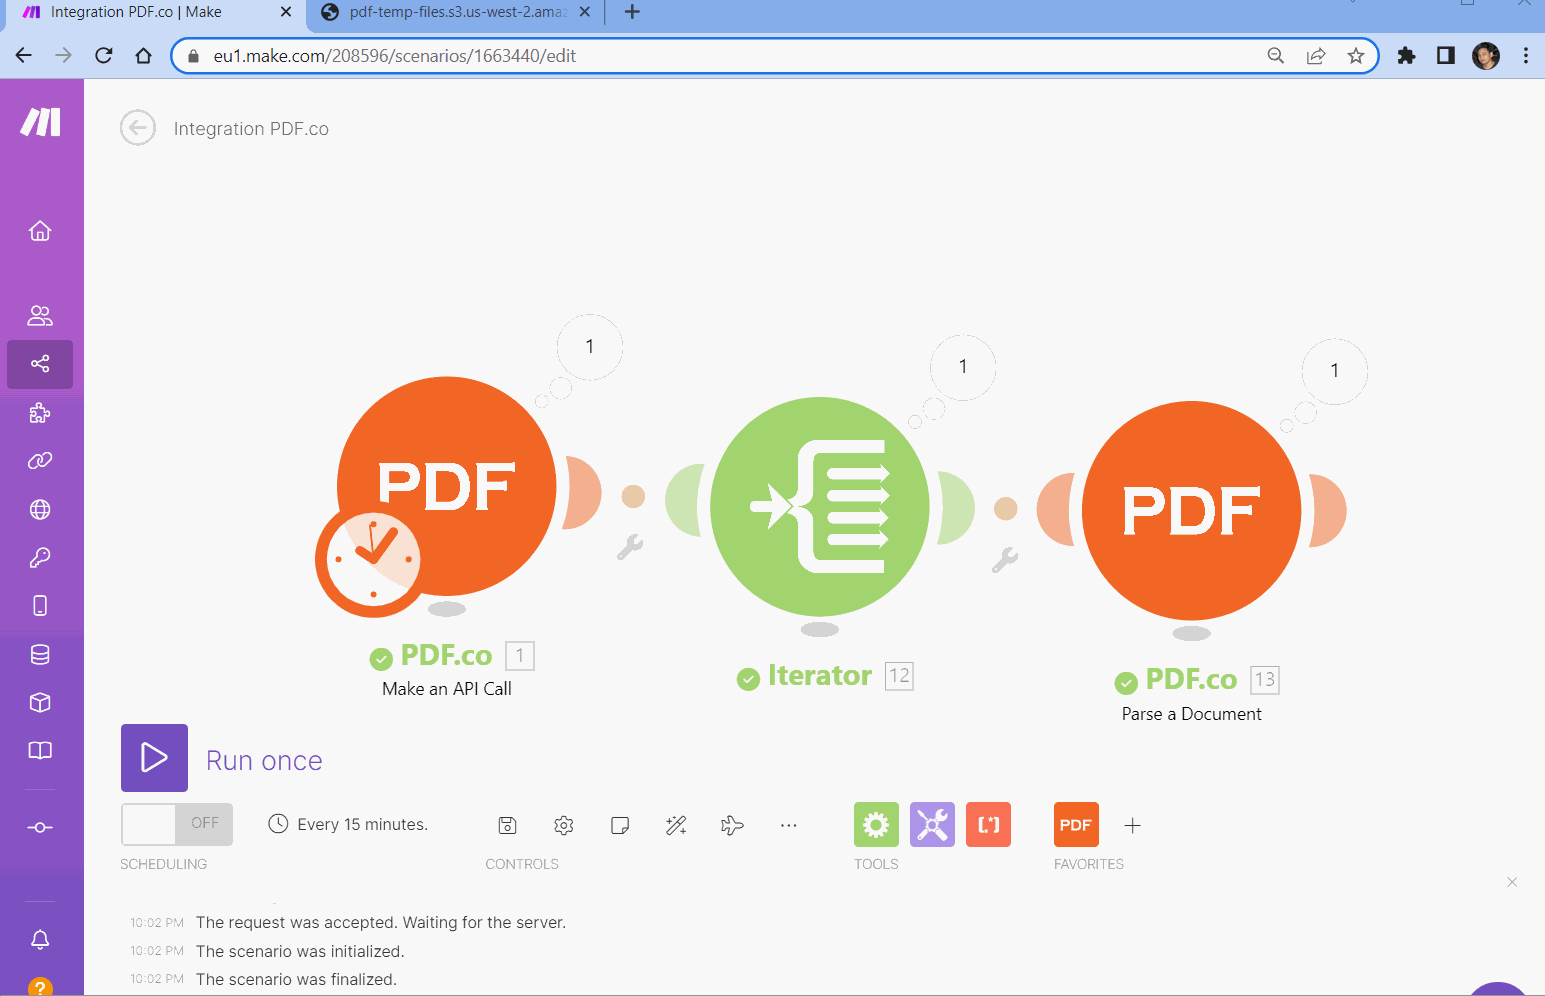 PDF.co PDF Split and Document Parser Workflow